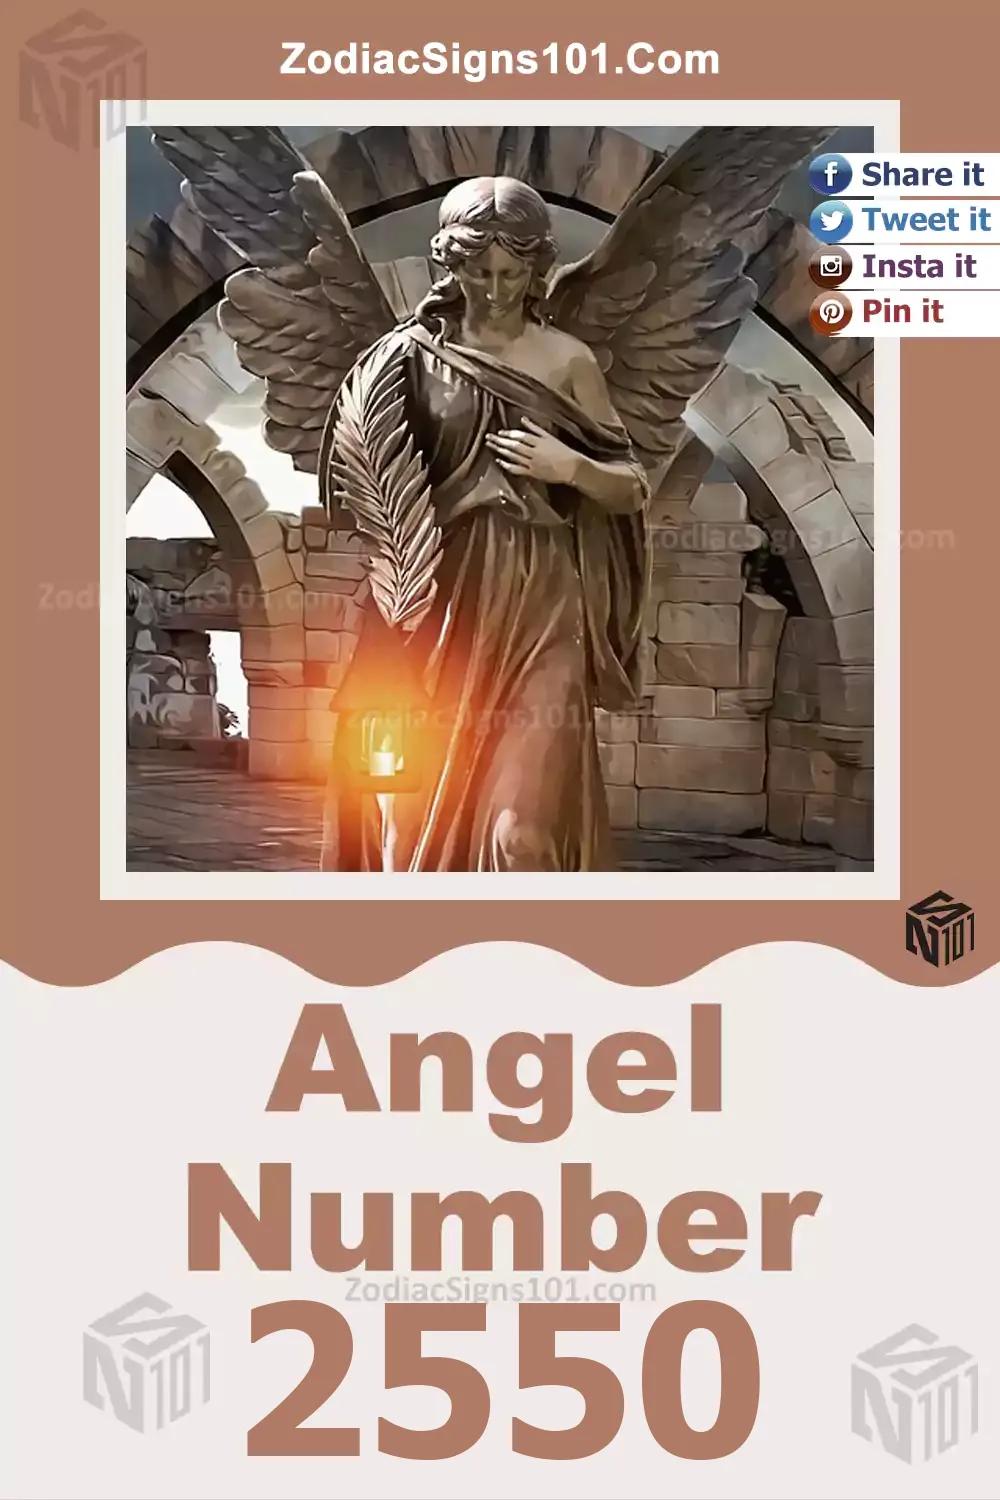 2550-Angel-Number-Meaning.jpg